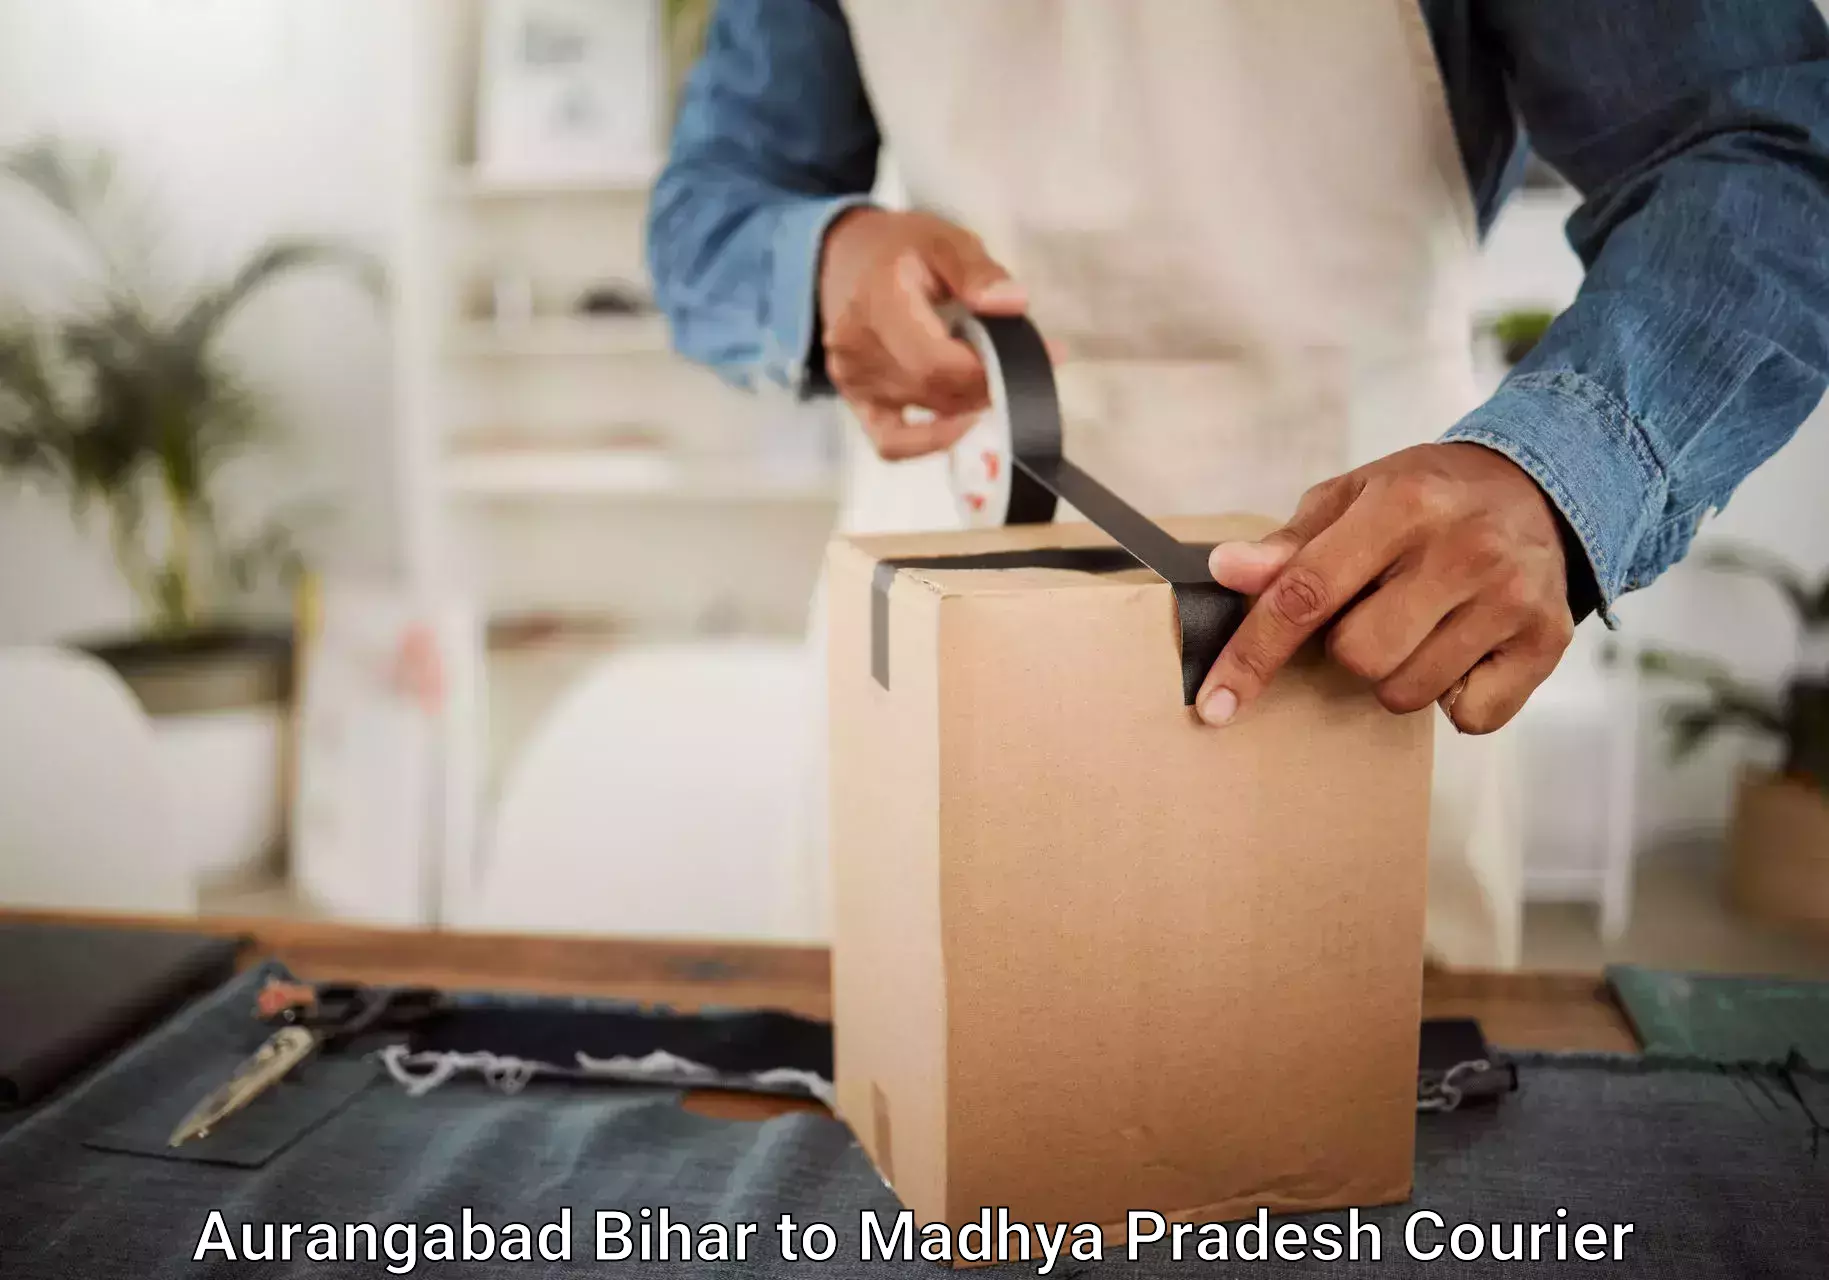 Luggage shipment specialists Aurangabad Bihar to Gosalpur